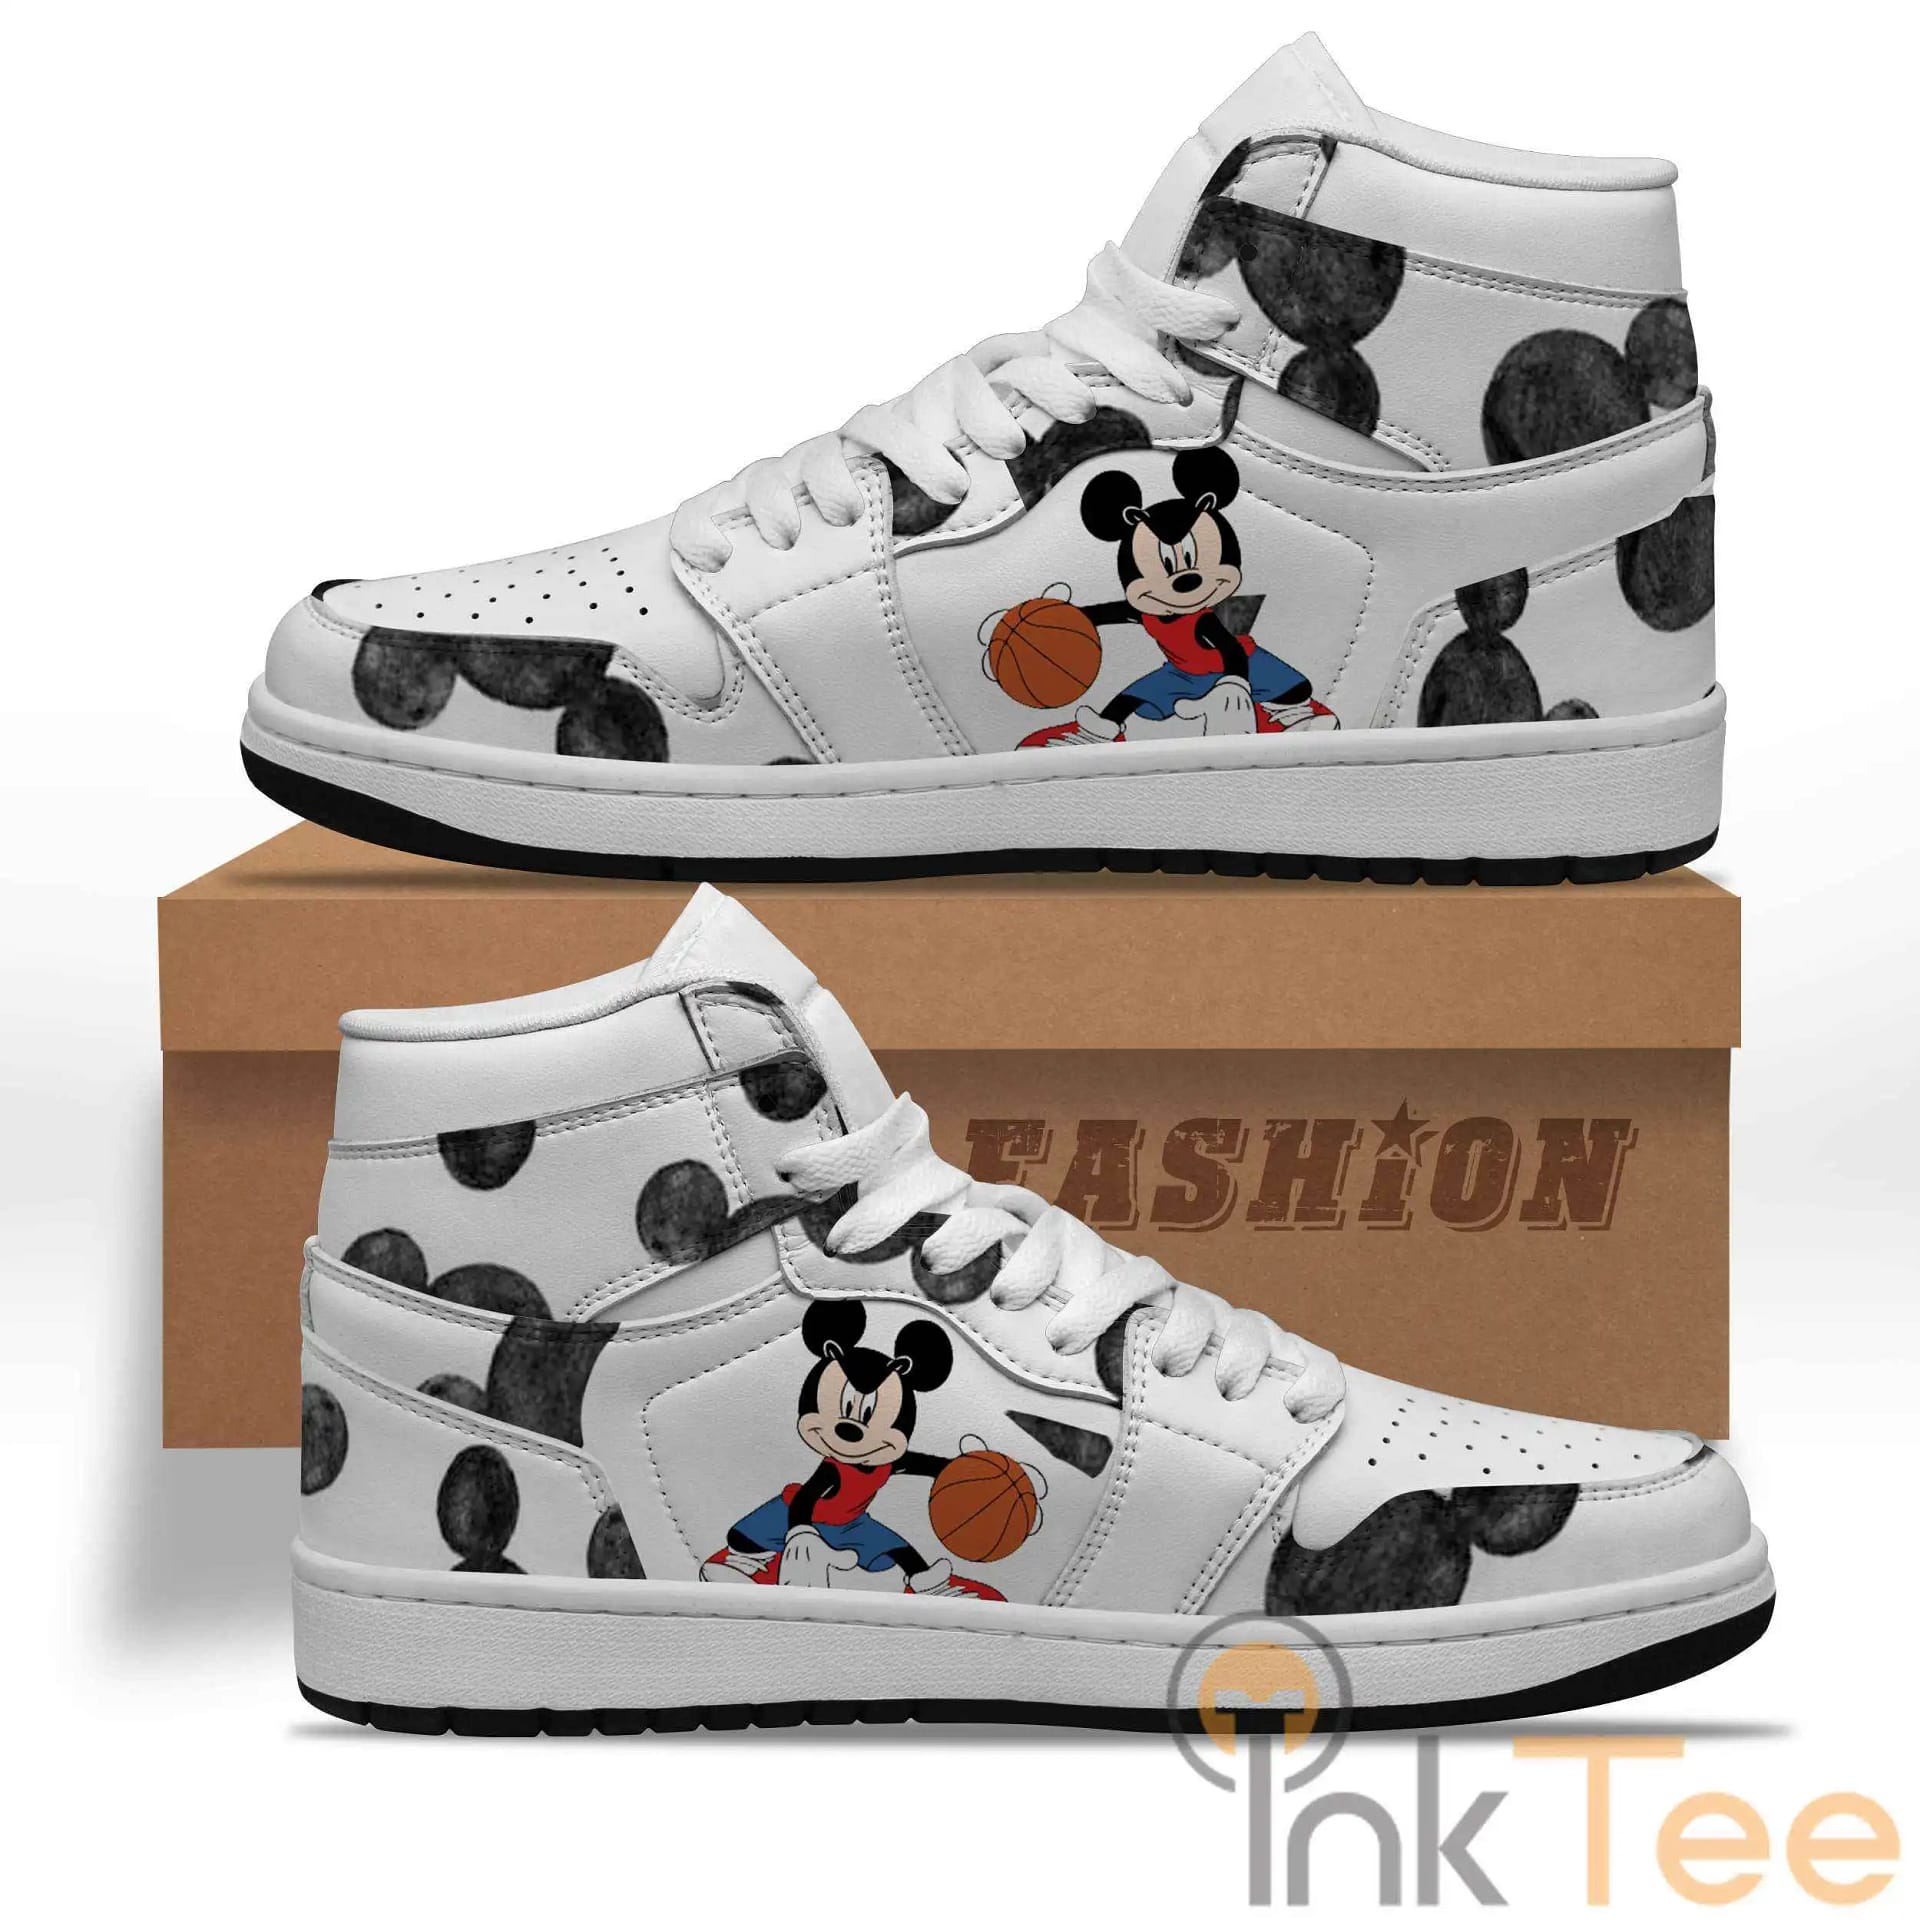 Mickey Mouse Playing Basketball Custom Air Jordan Shoes